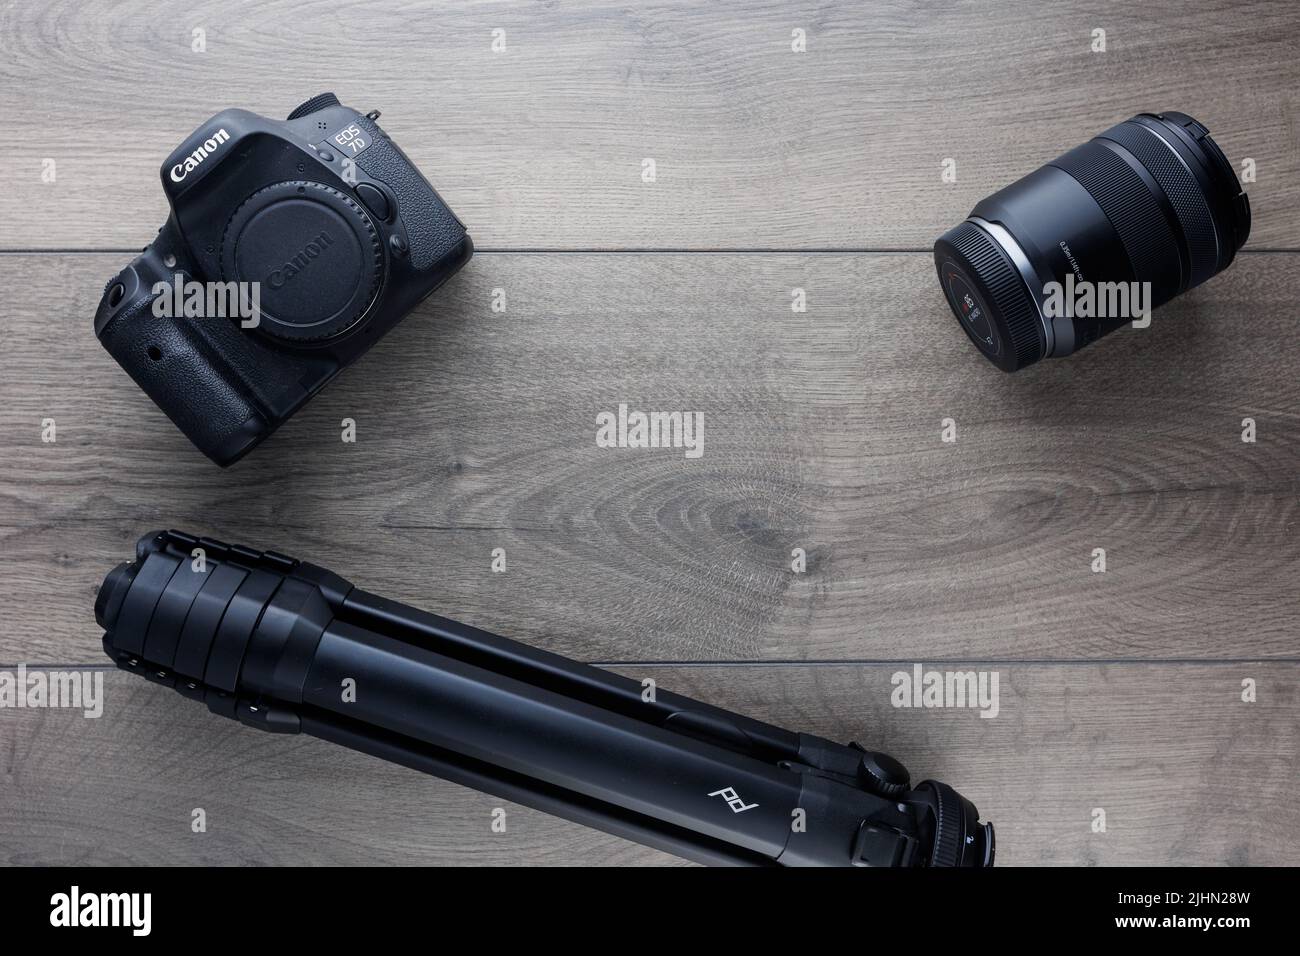 Canon 7D, Peak Design Travel Tripod, Canon RF 85mm Lens flat lay on wooden background Stock Photo